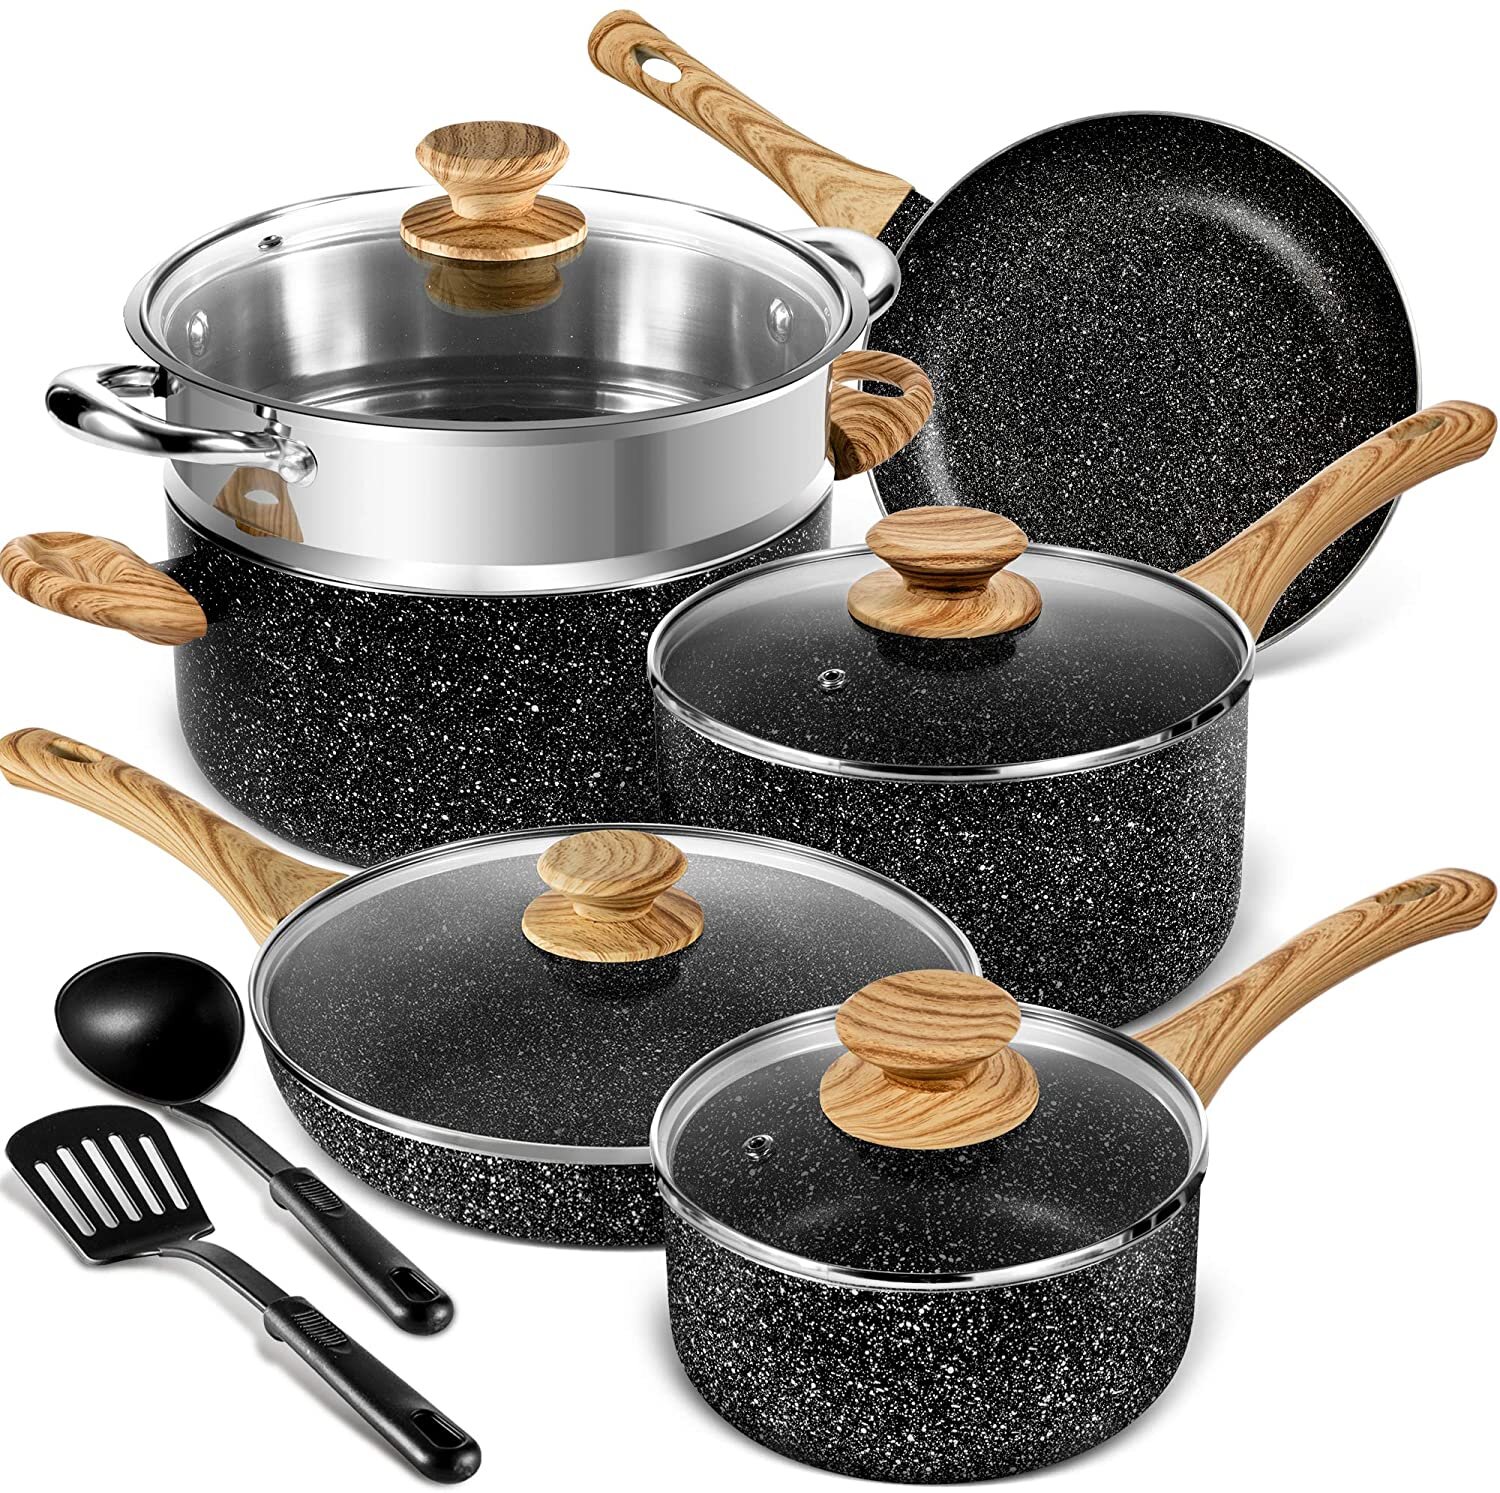 MICHELANGELO Stainless Steel Saucepan Set, 1QT & 3QT Saucepans with Lids,  Nonstick Sauce Pan with Lid, Stainless Steel Pot Set 4 Pieces, Dishwasher